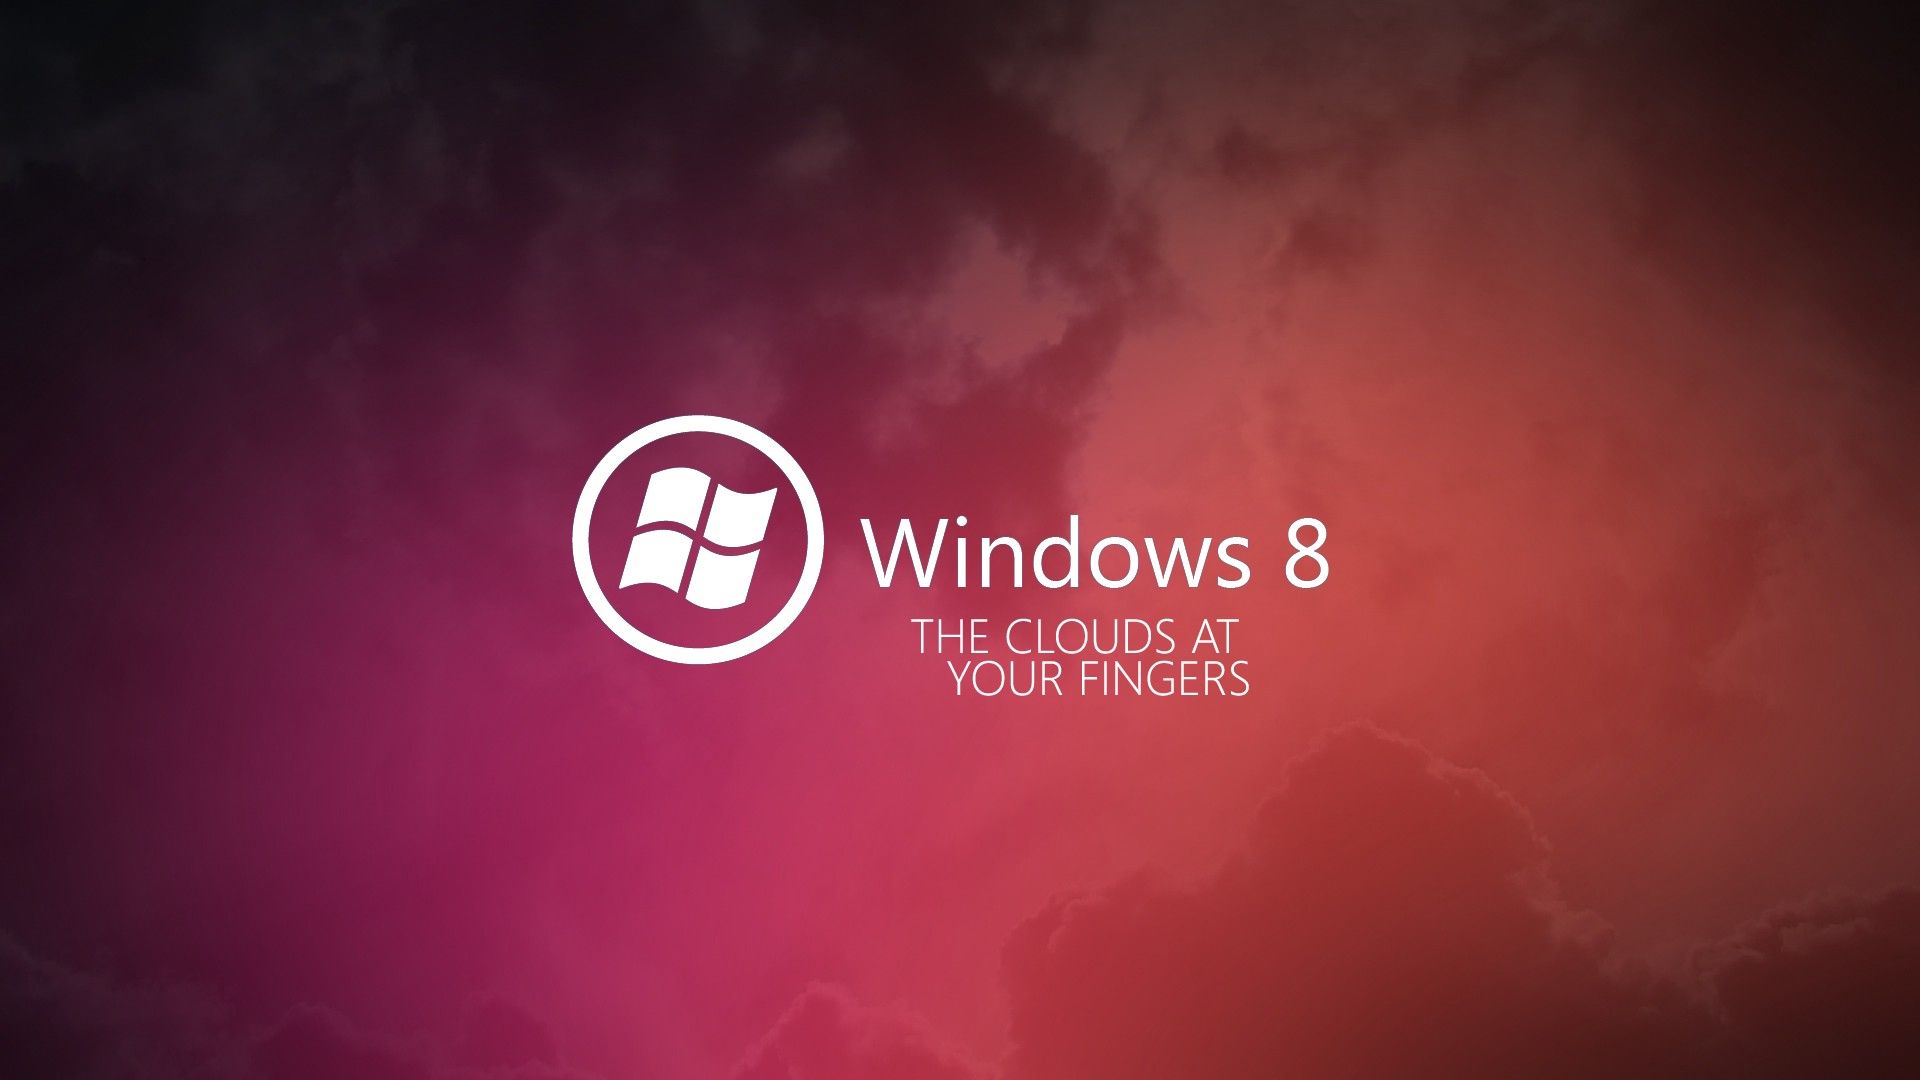 windows 8 wallpaper hd 3d download -